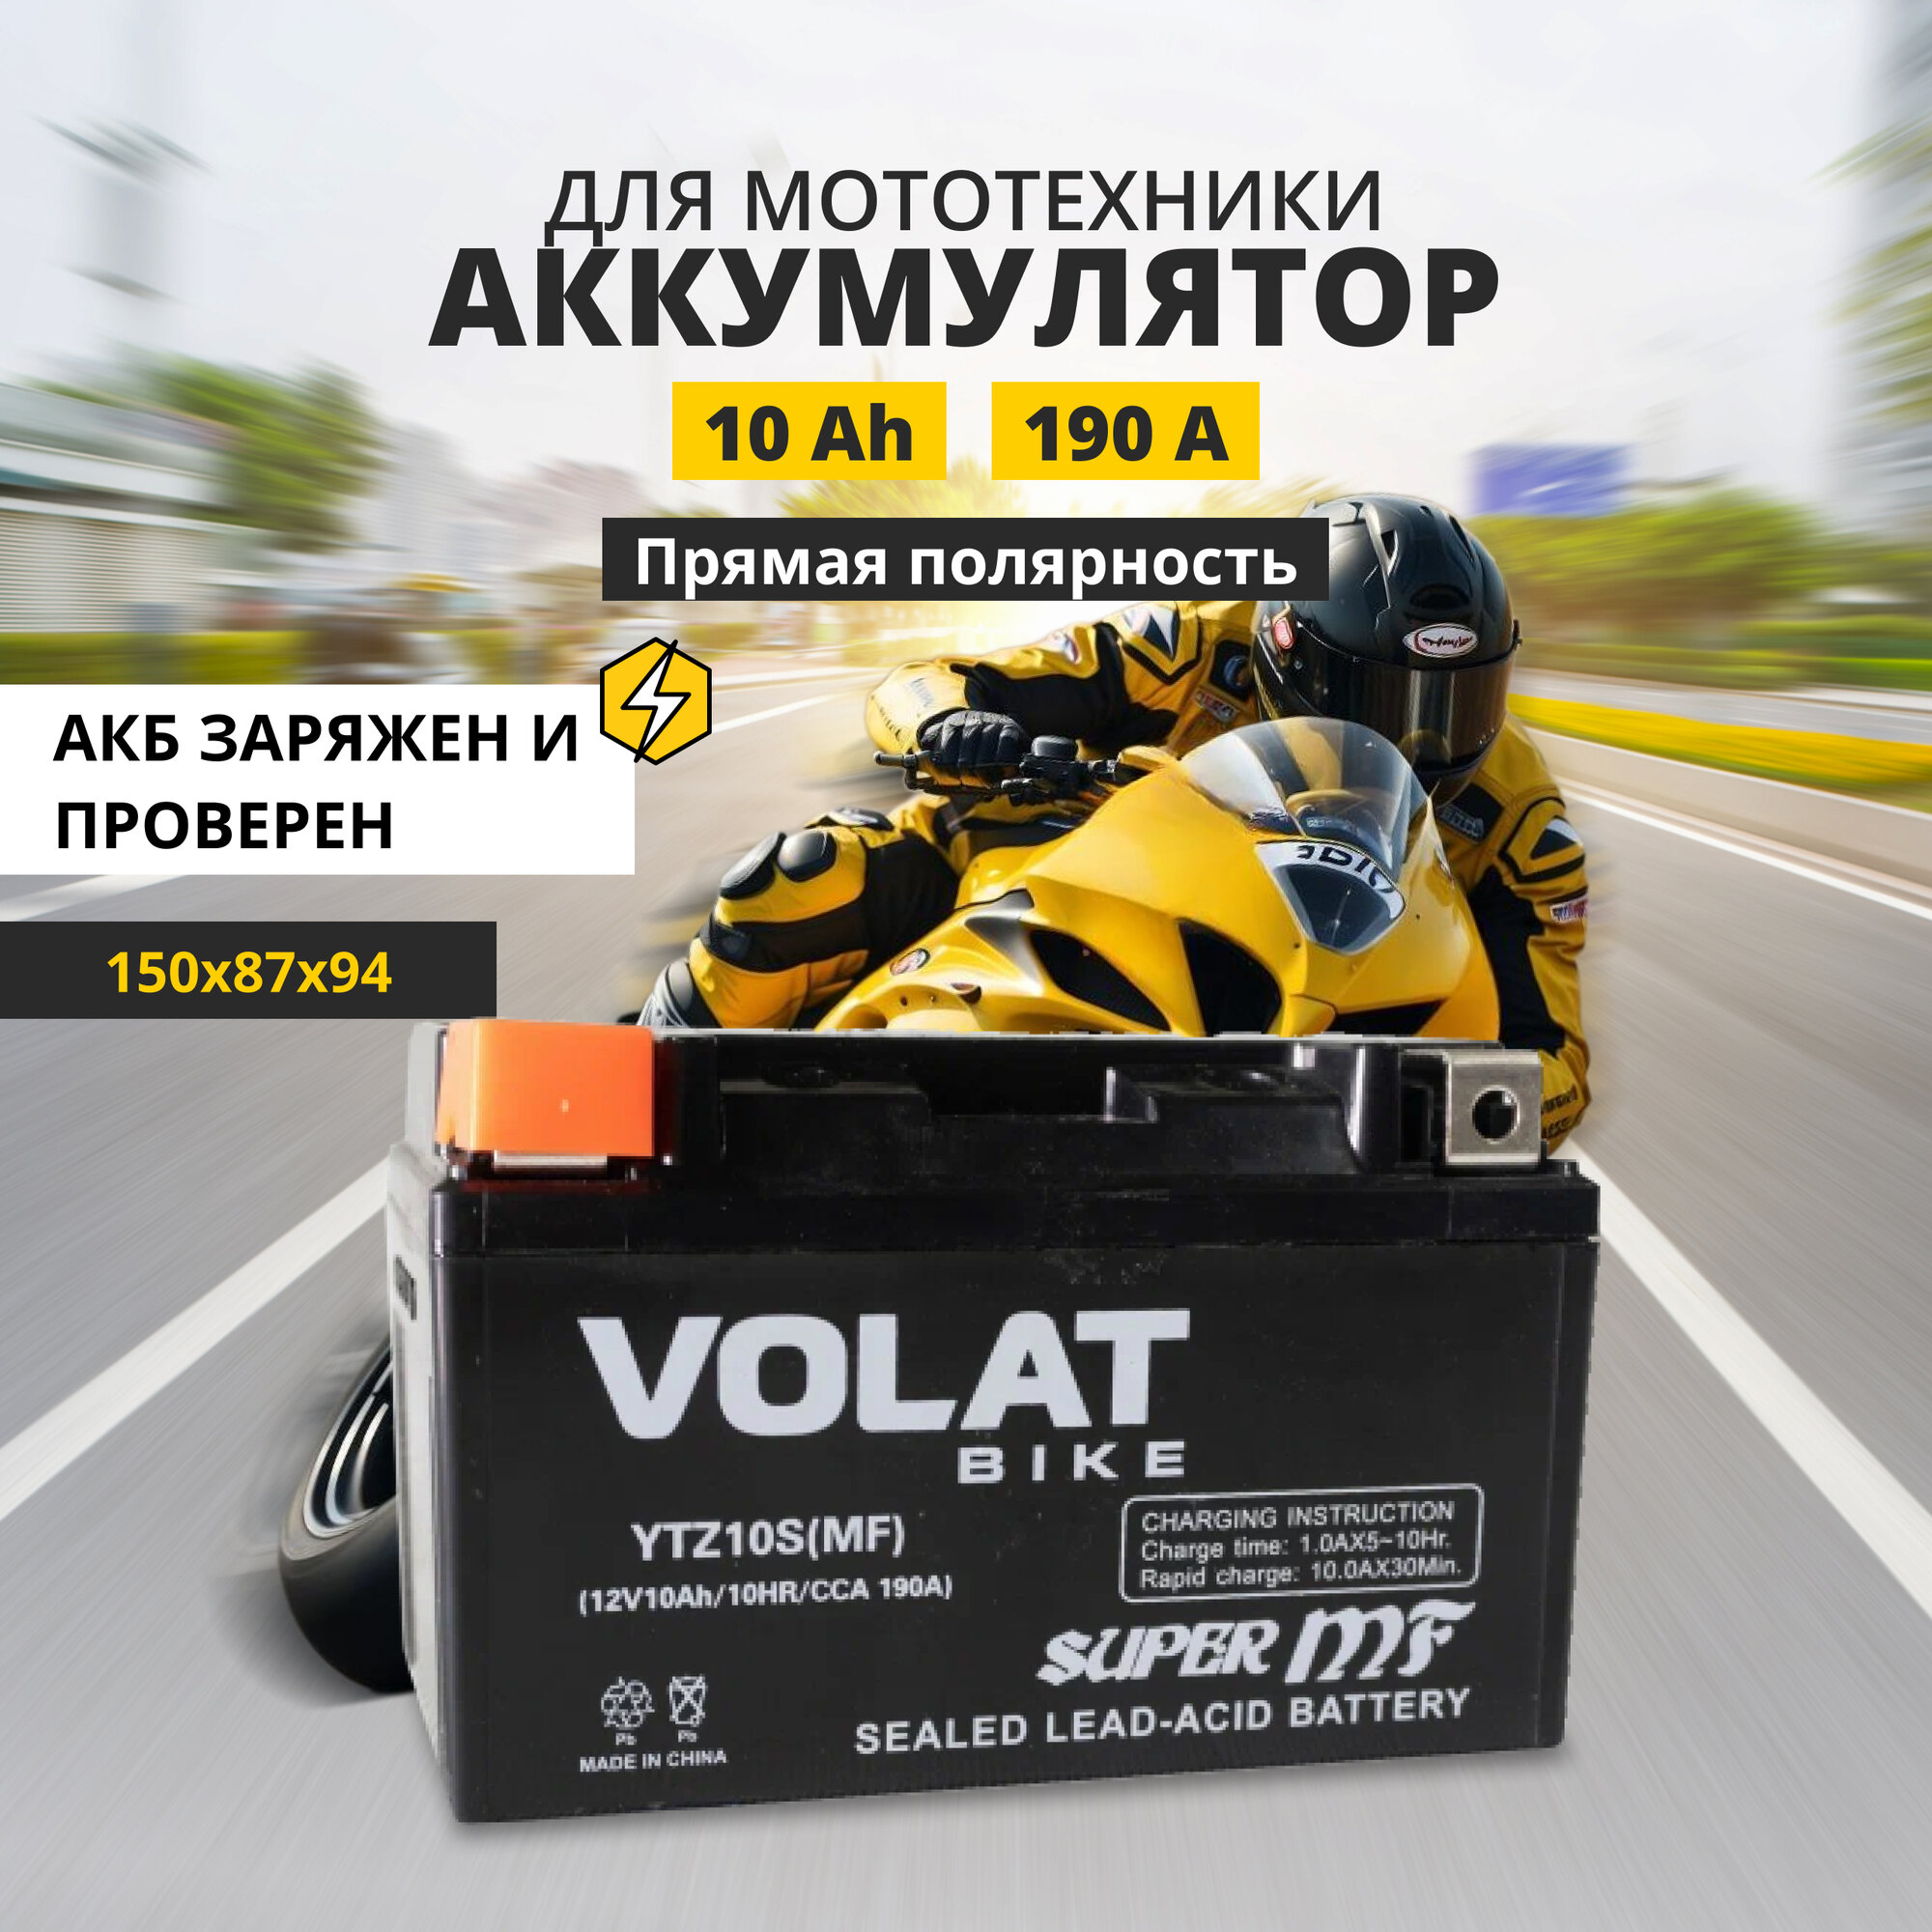 Аккумулятор для мотоцикла 12в 10 Ah 190 A прямая полярность VOLAT YTZ10S(MF) акб для мототехники 12v AGM мопеда скутера квадроцикла 150x87x94